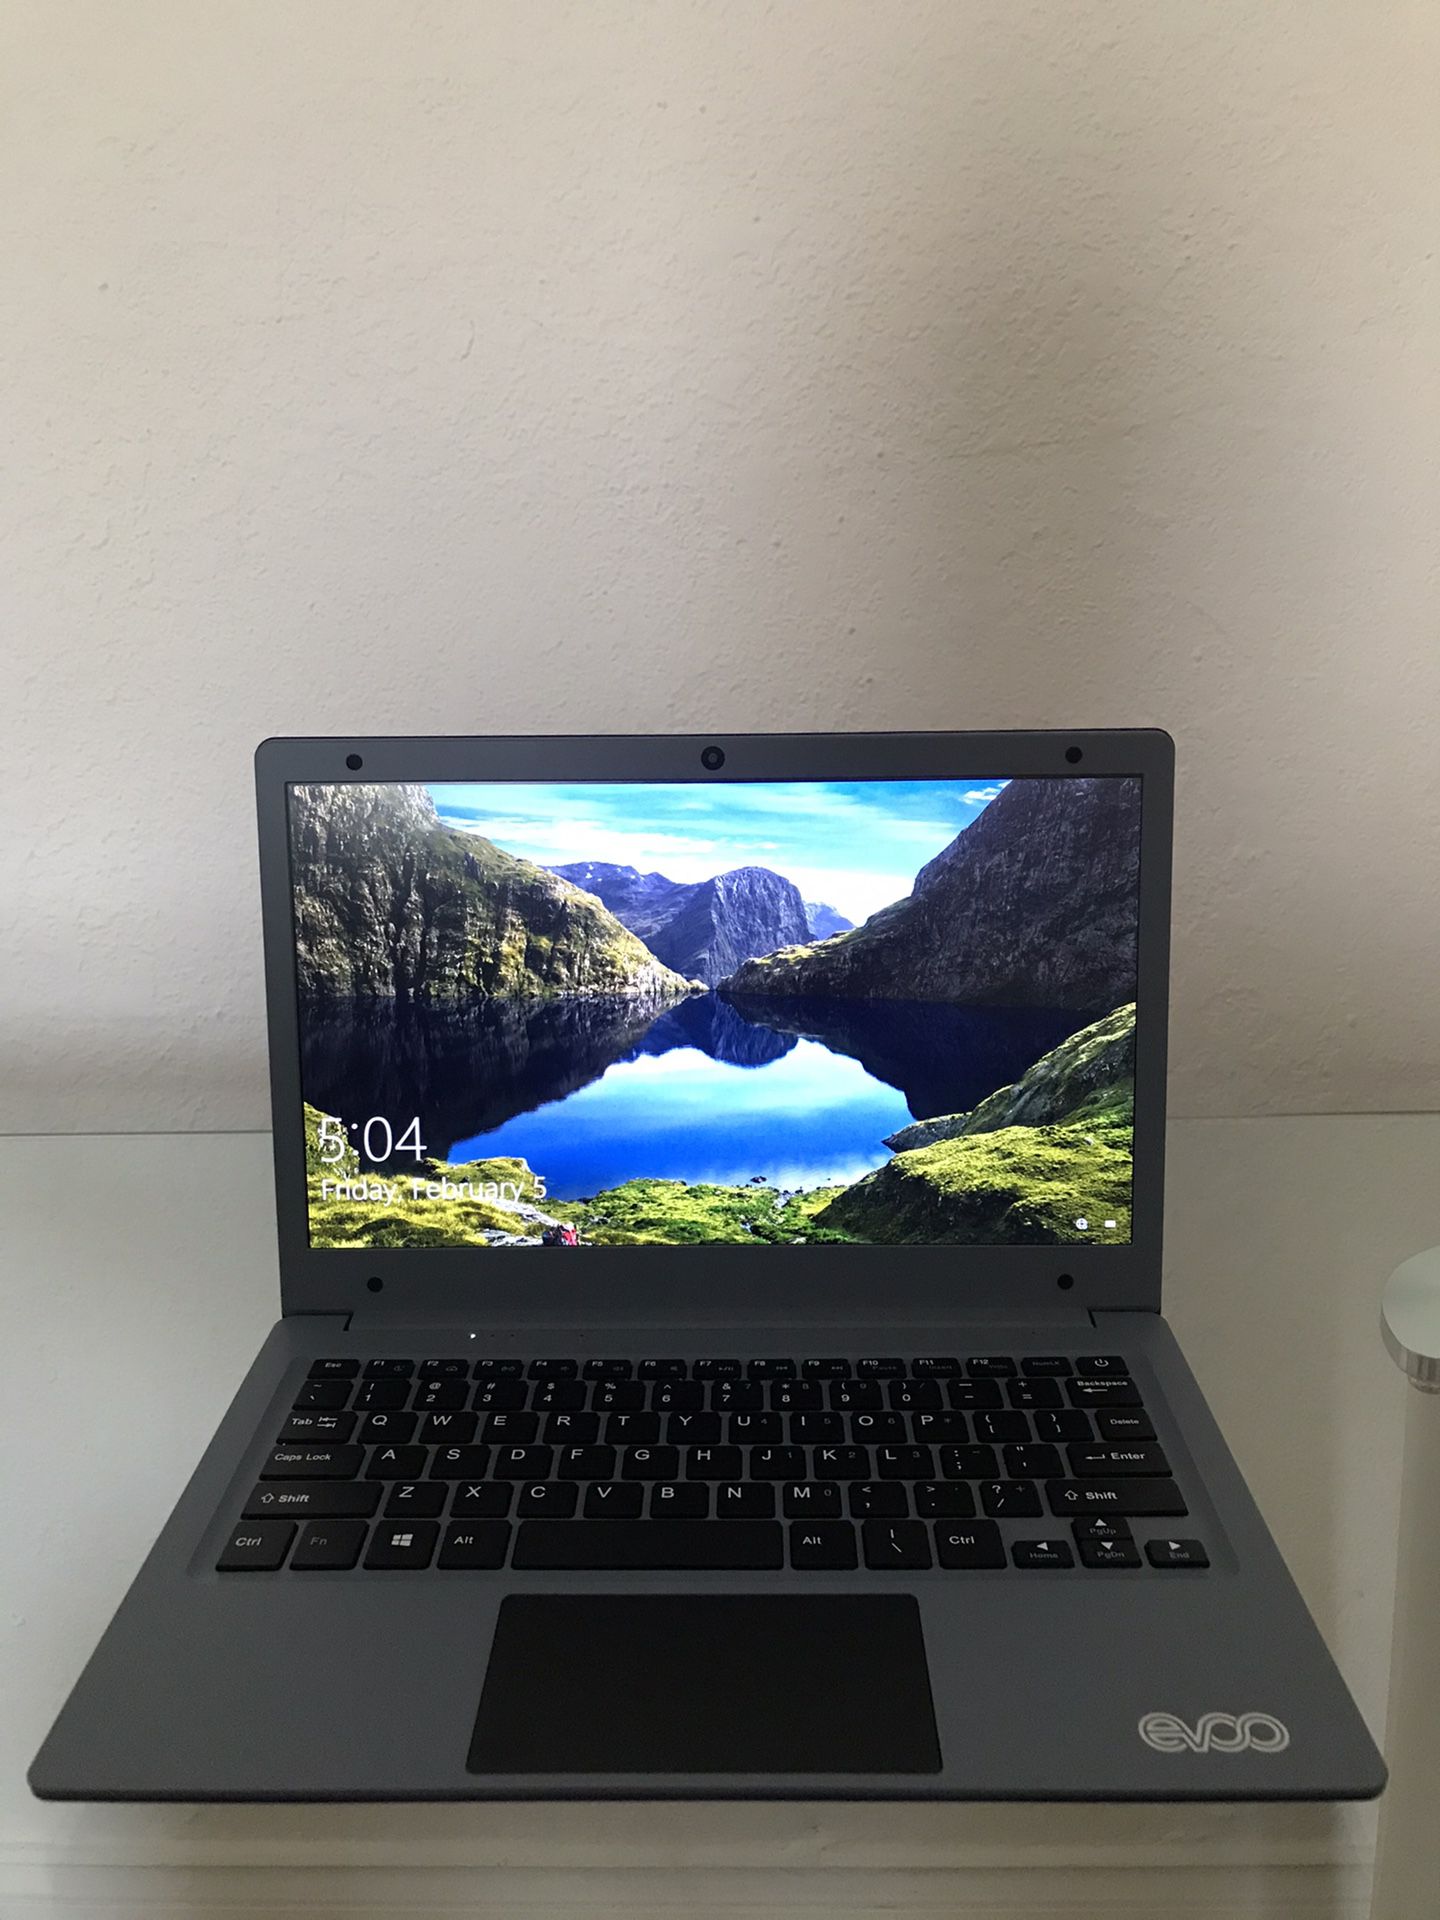 Laptop HD With Windows 10